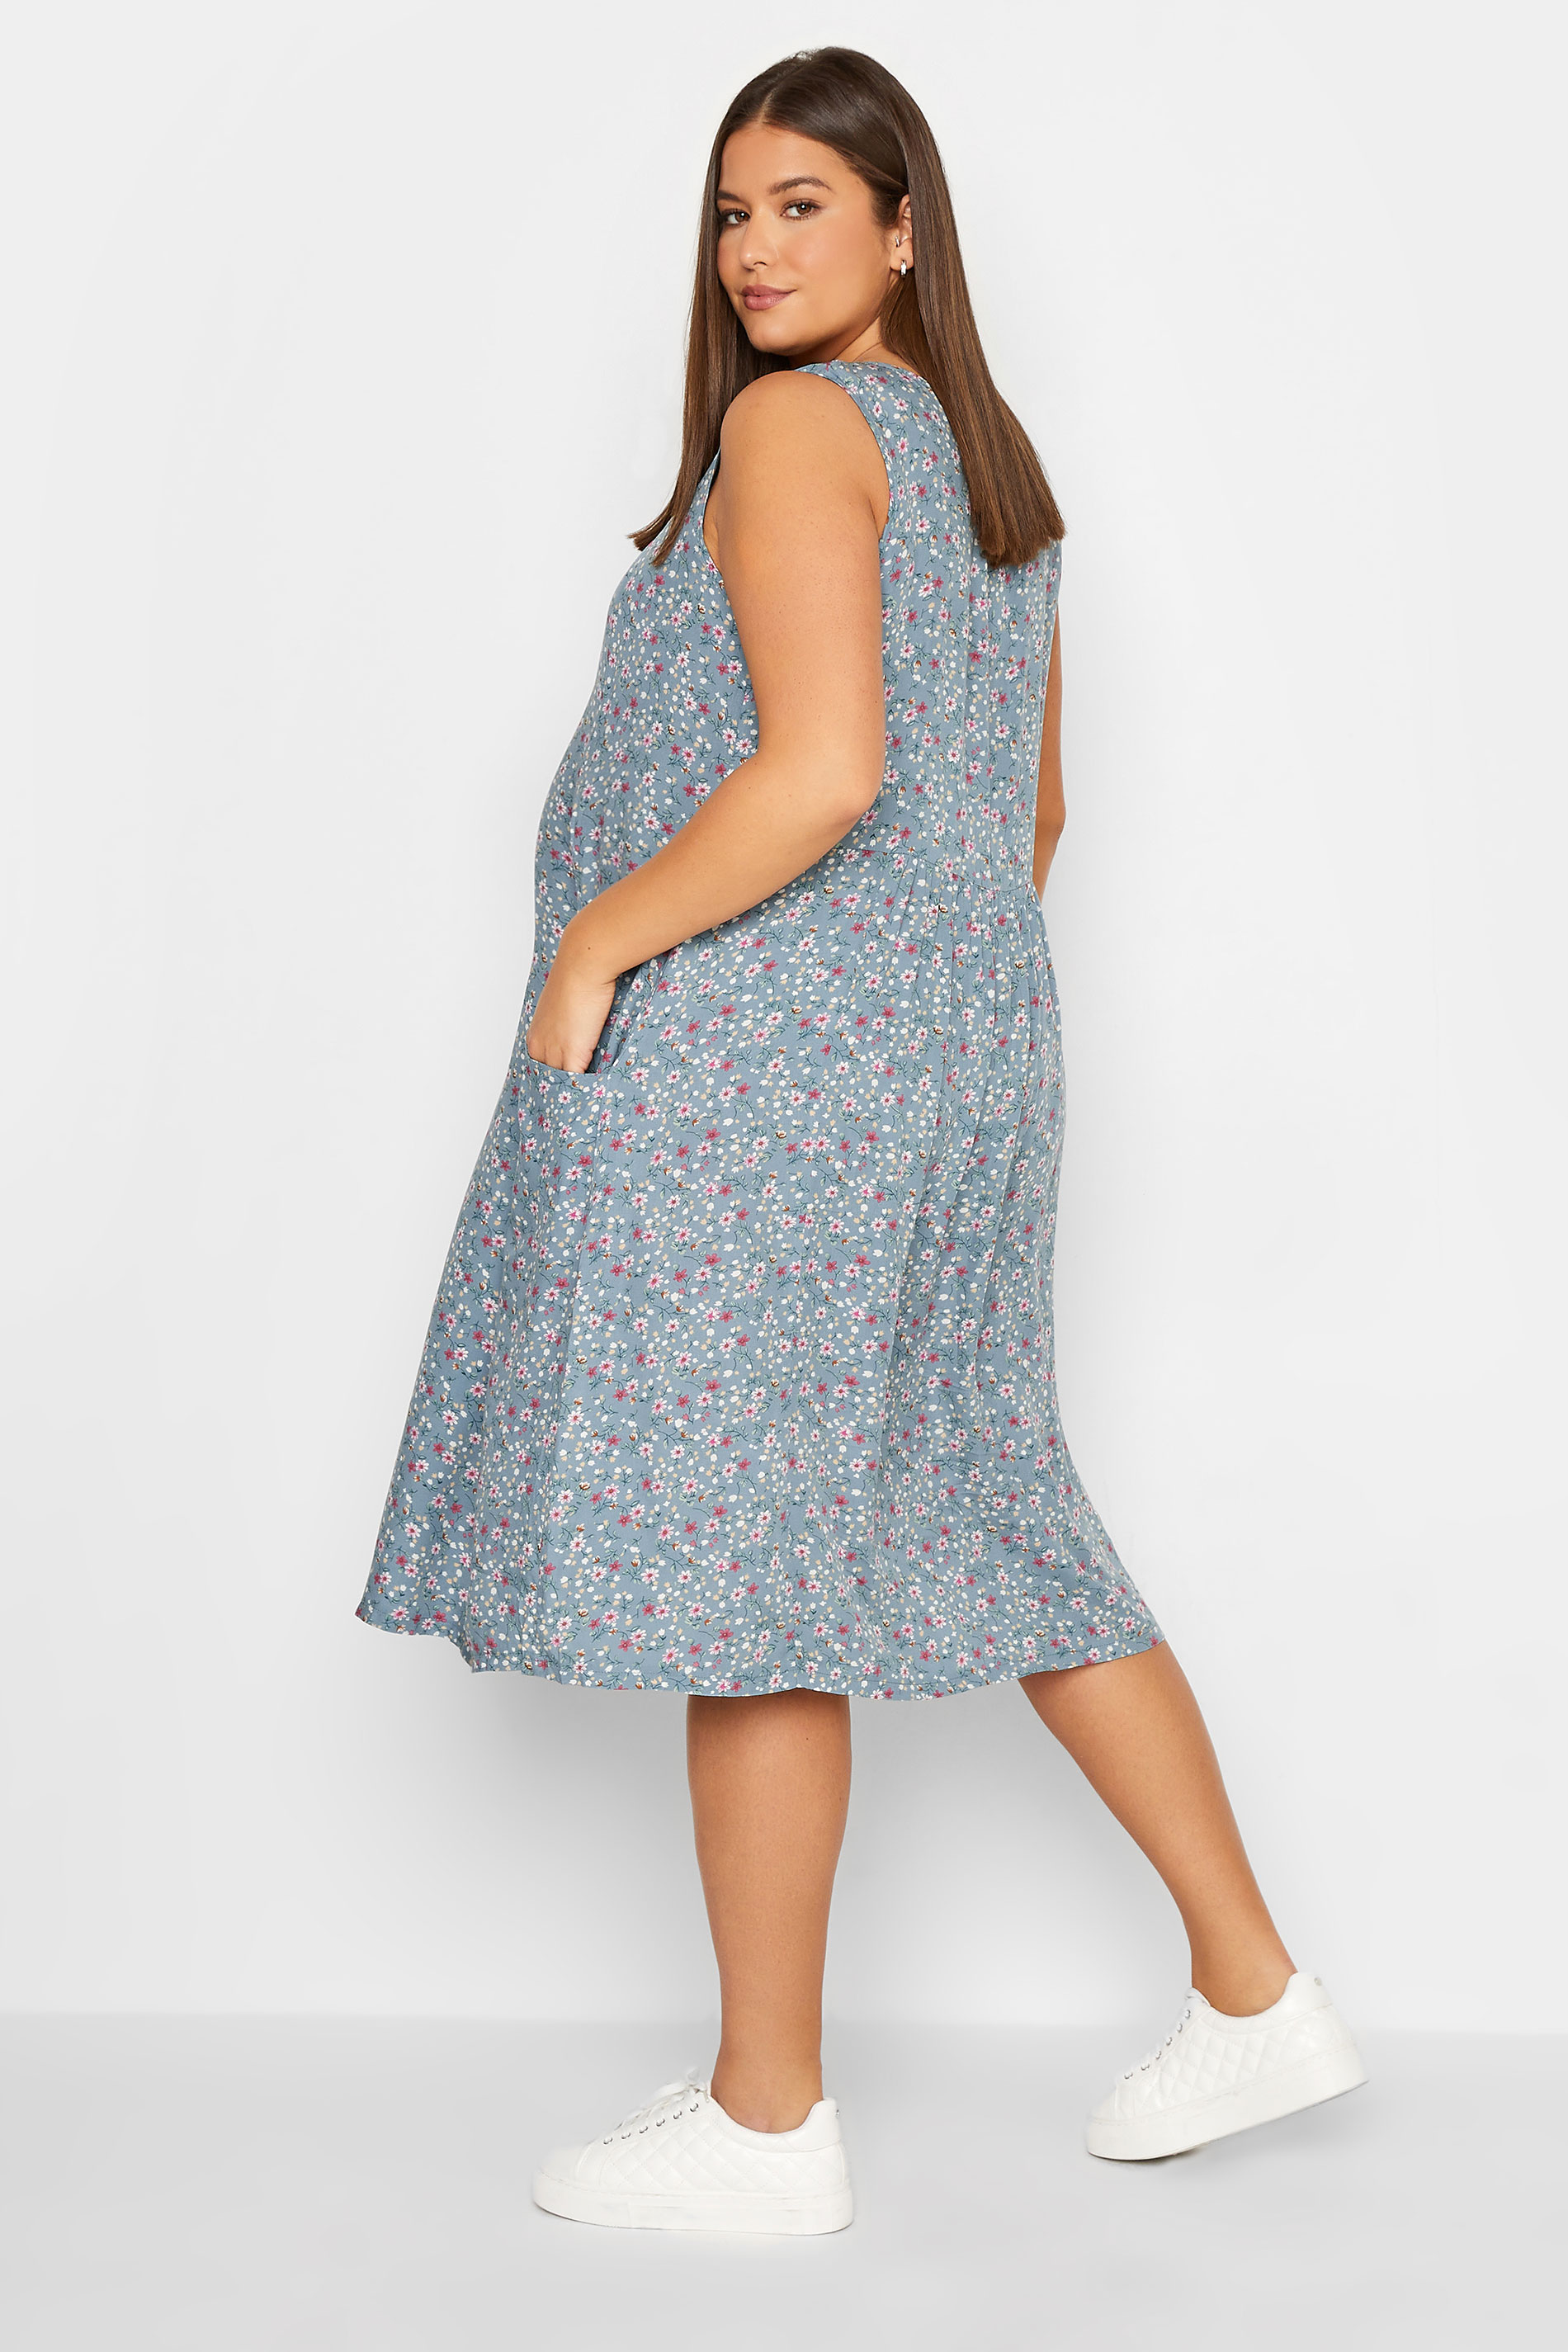 LTS Maternity Blue Floral Sleeveless Dress | Long Tall Sally 3